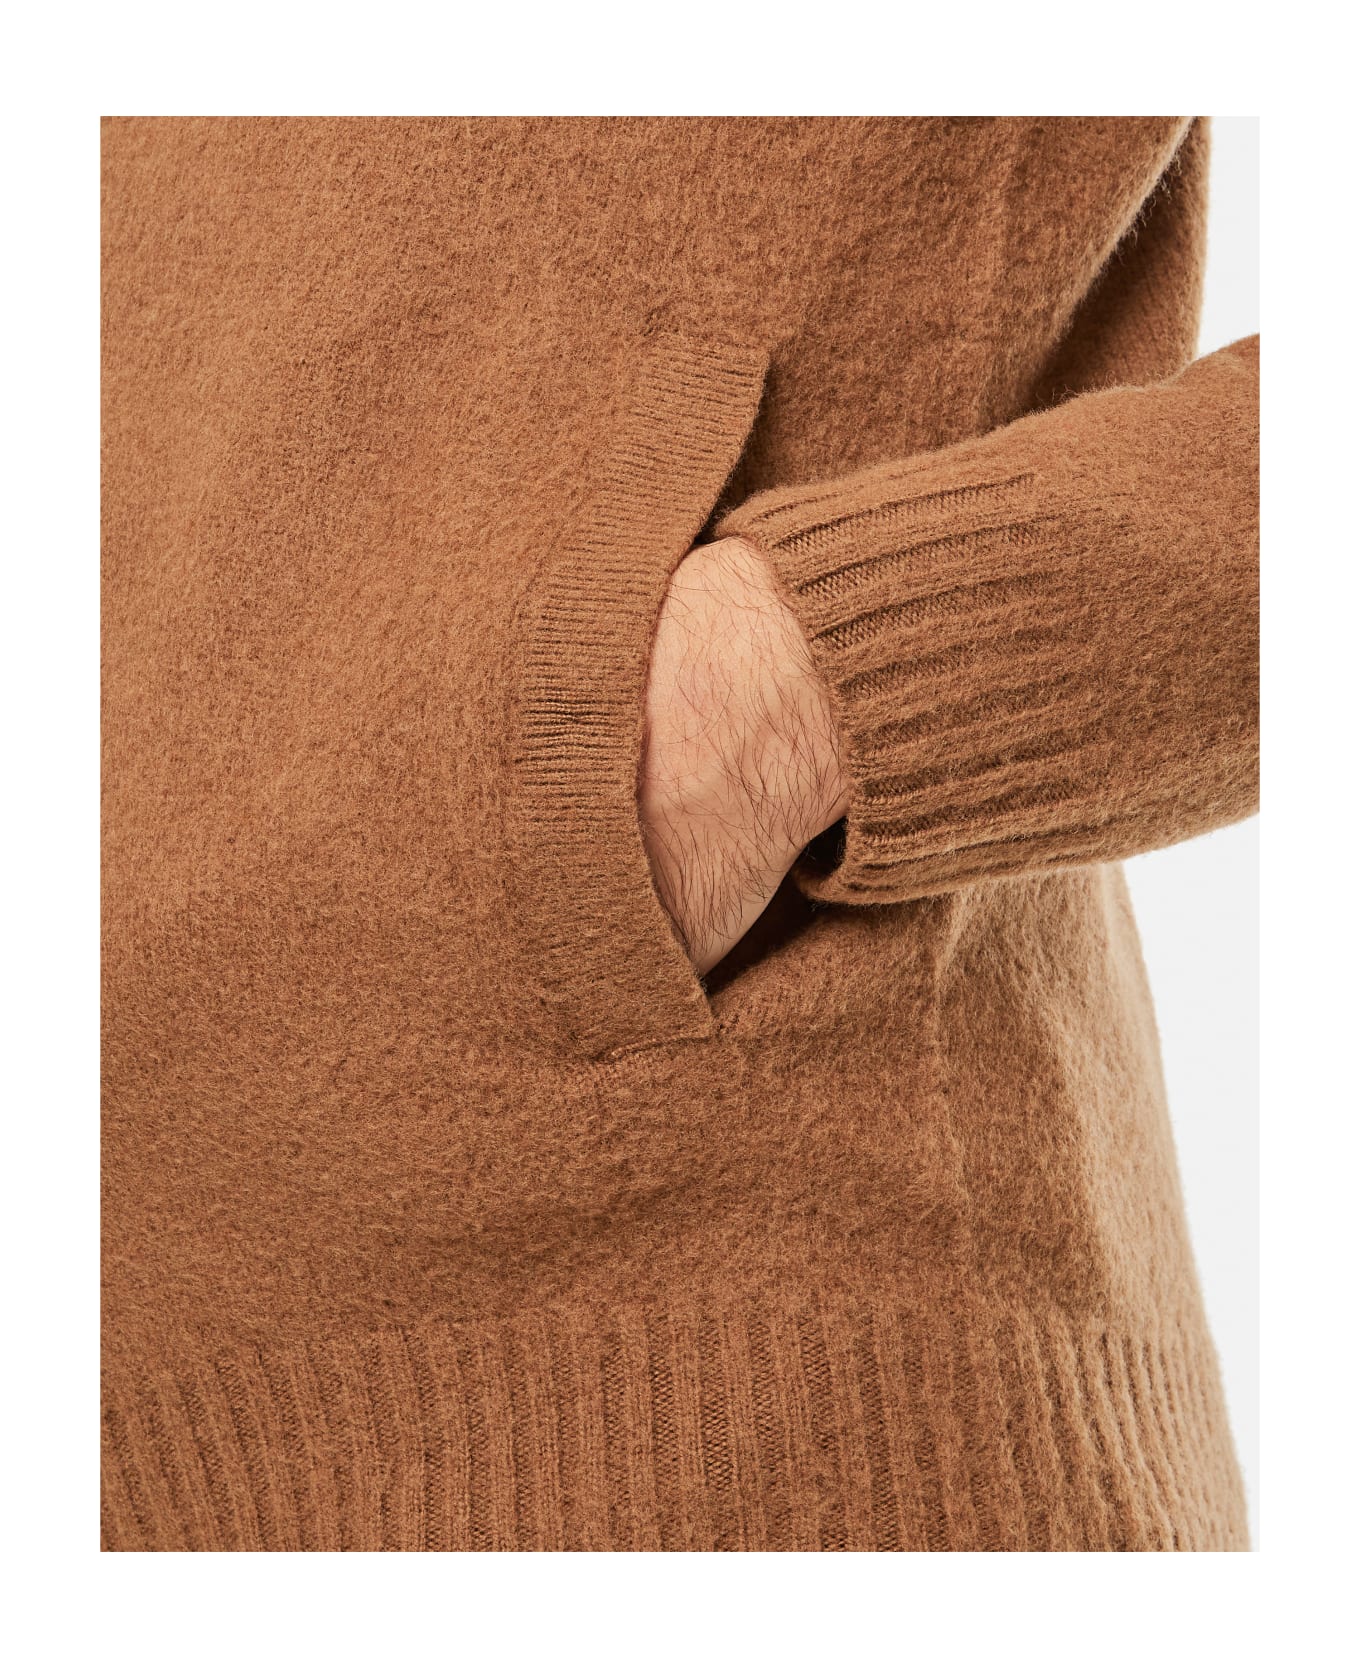 Drumohr Wool Cardigan Sweater - Brown